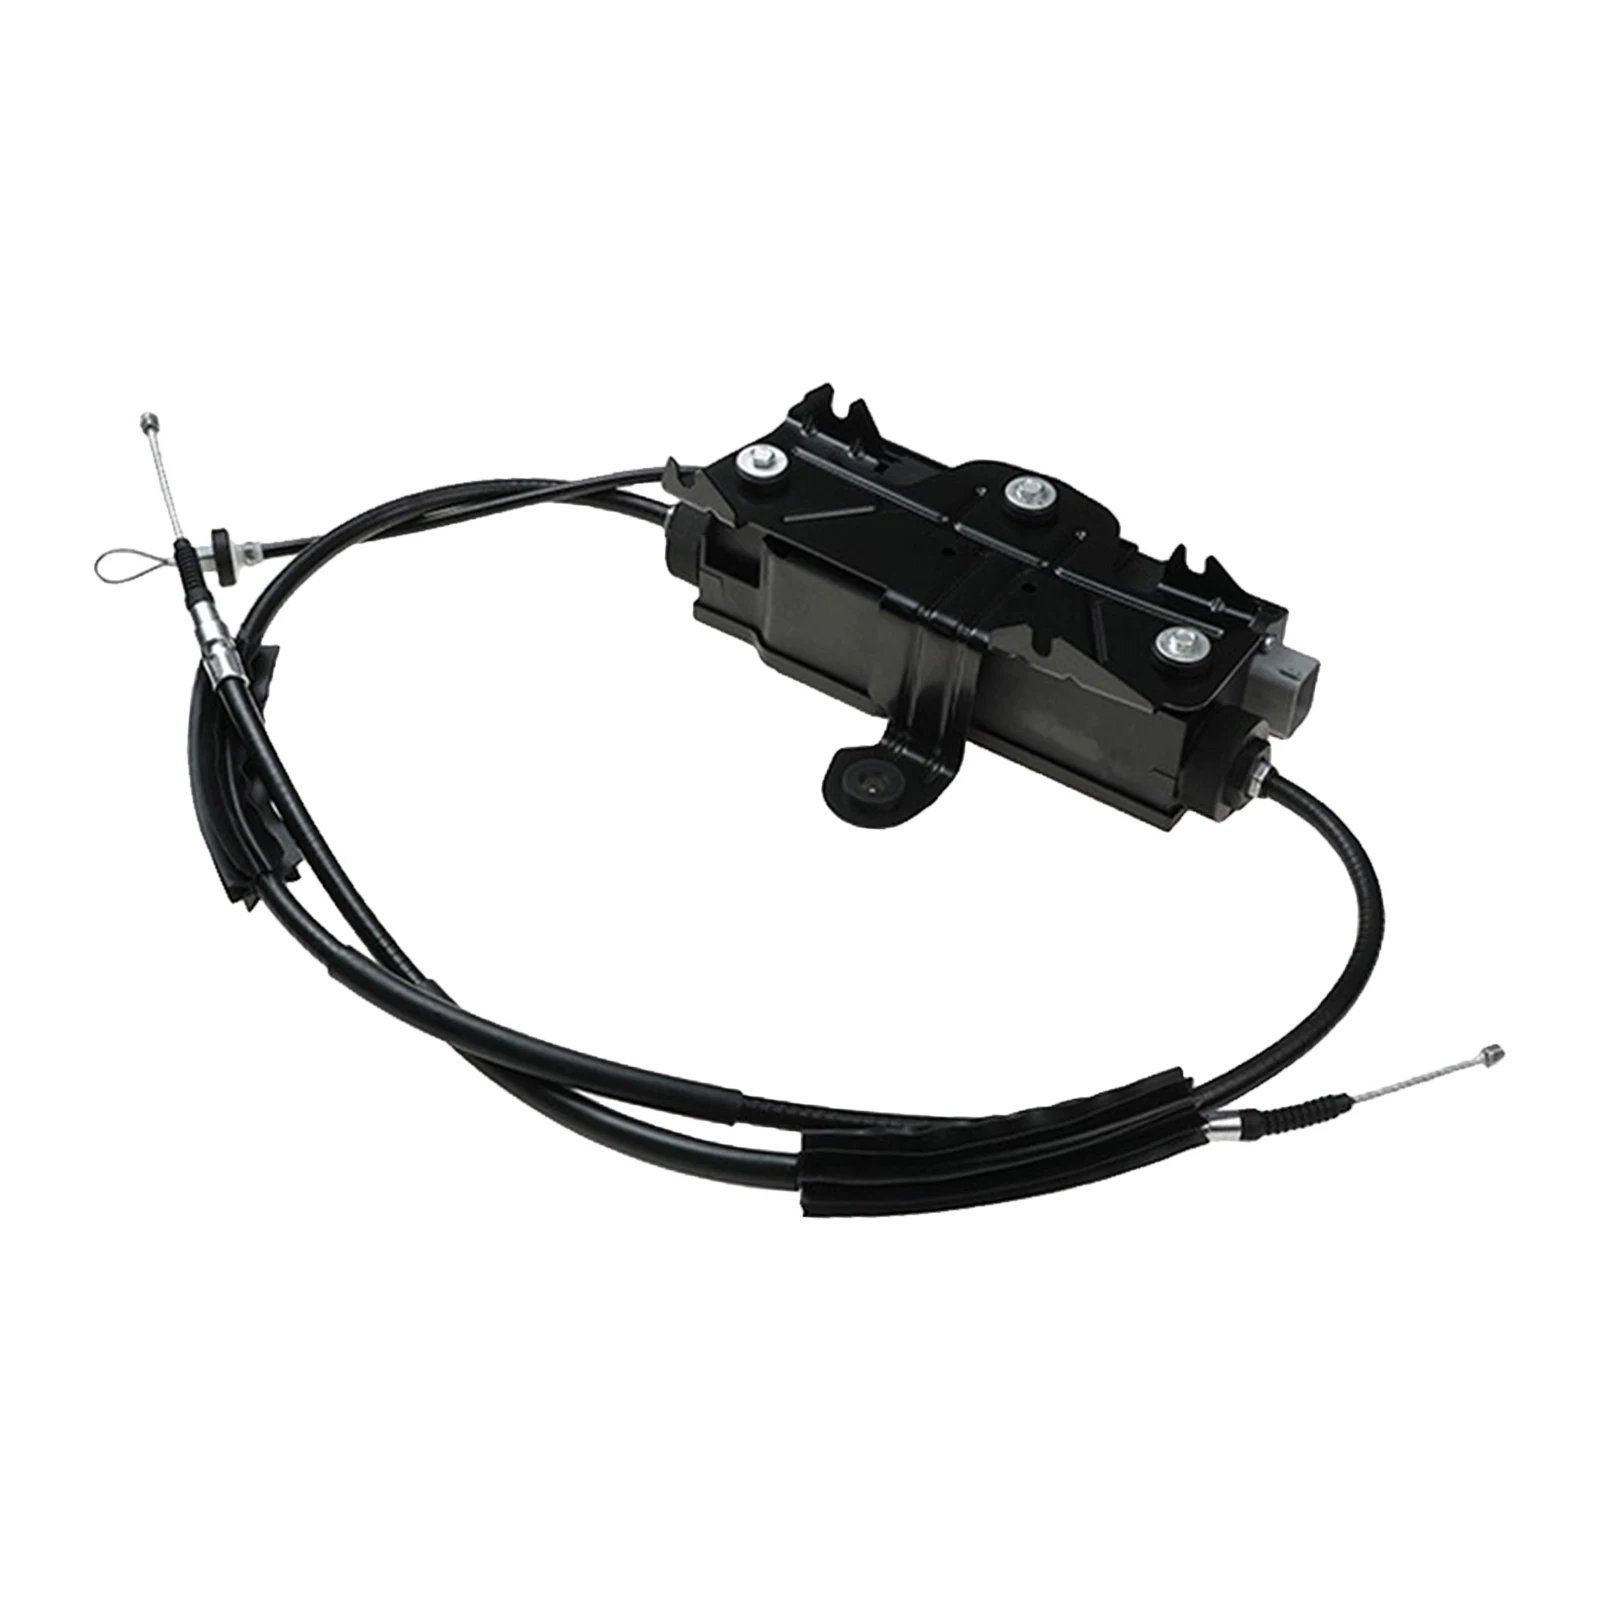 Park Brake Module, Hand Brake Actuator for BMW 7 Series F01 F04 34436877316 Accessories